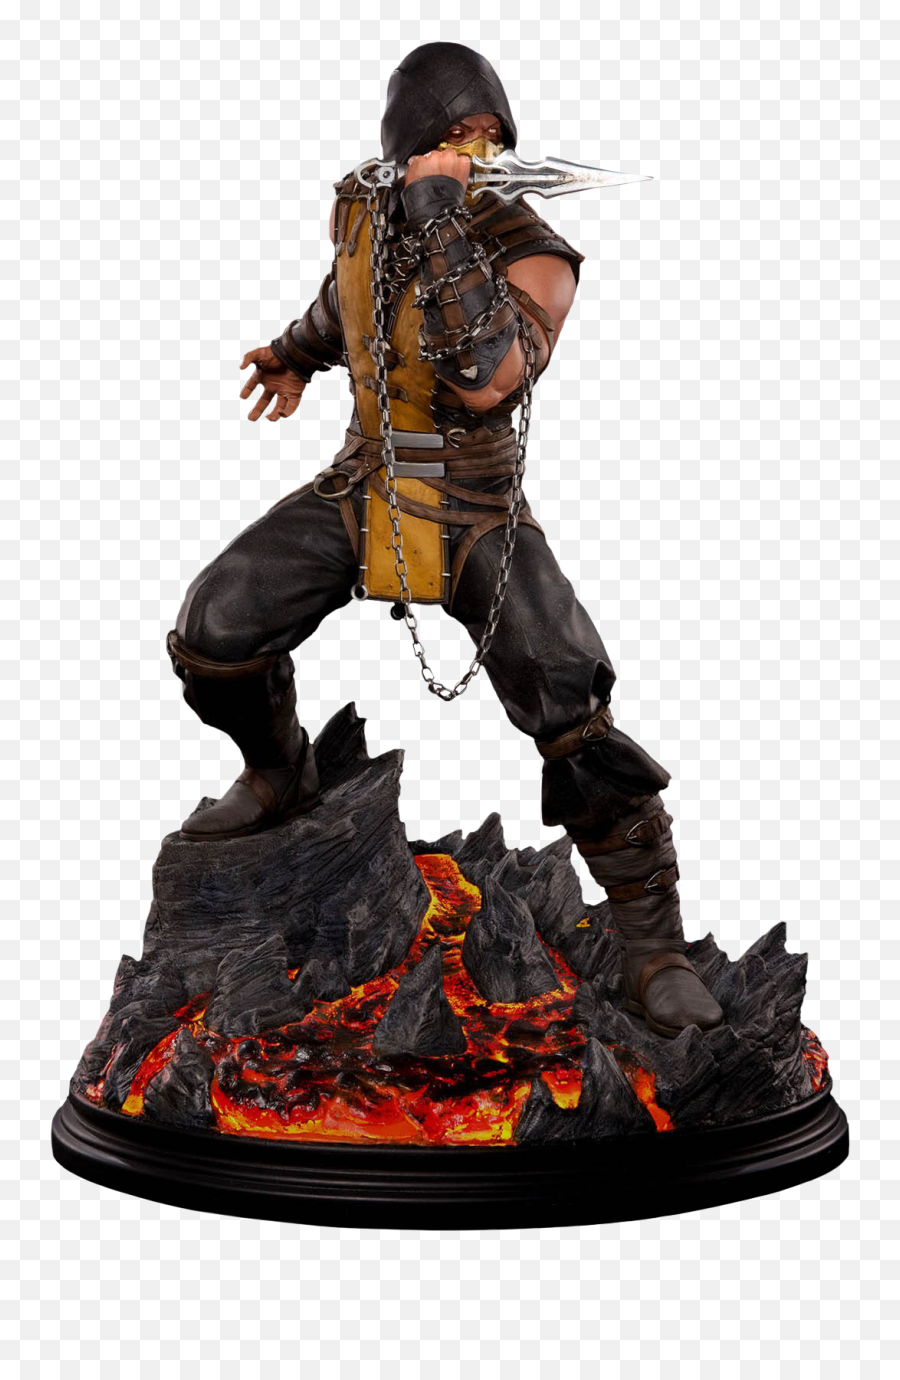 Mortal Kombat Scorpion Statue - Scorpion Mortal Kombat Figure Png,Scorpion Mortal Kombat Png